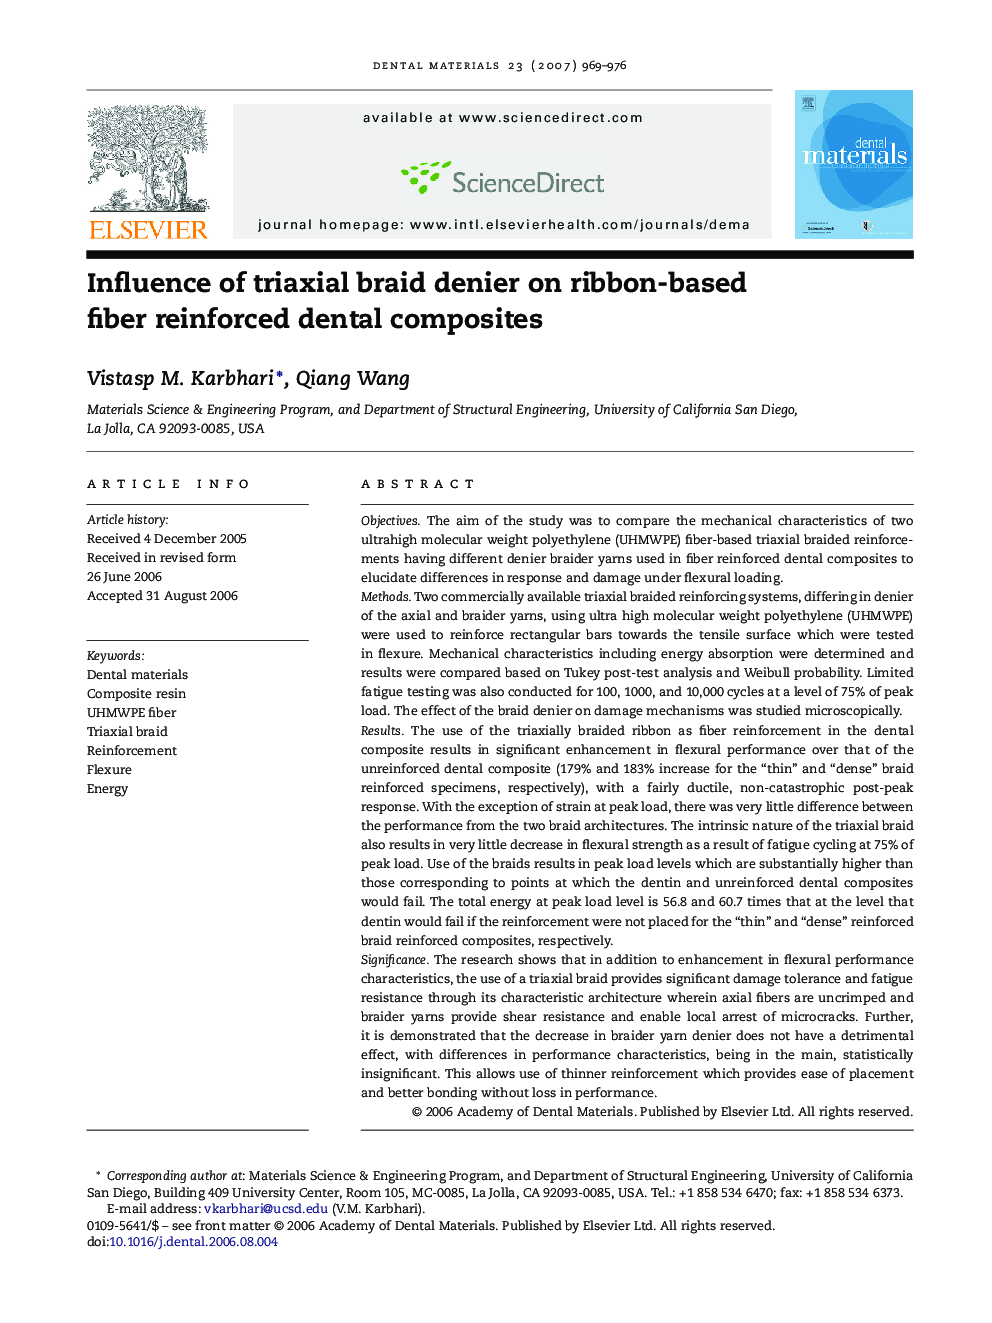 Influence of triaxial braid denier on ribbon-based fiber reinforced dental composites